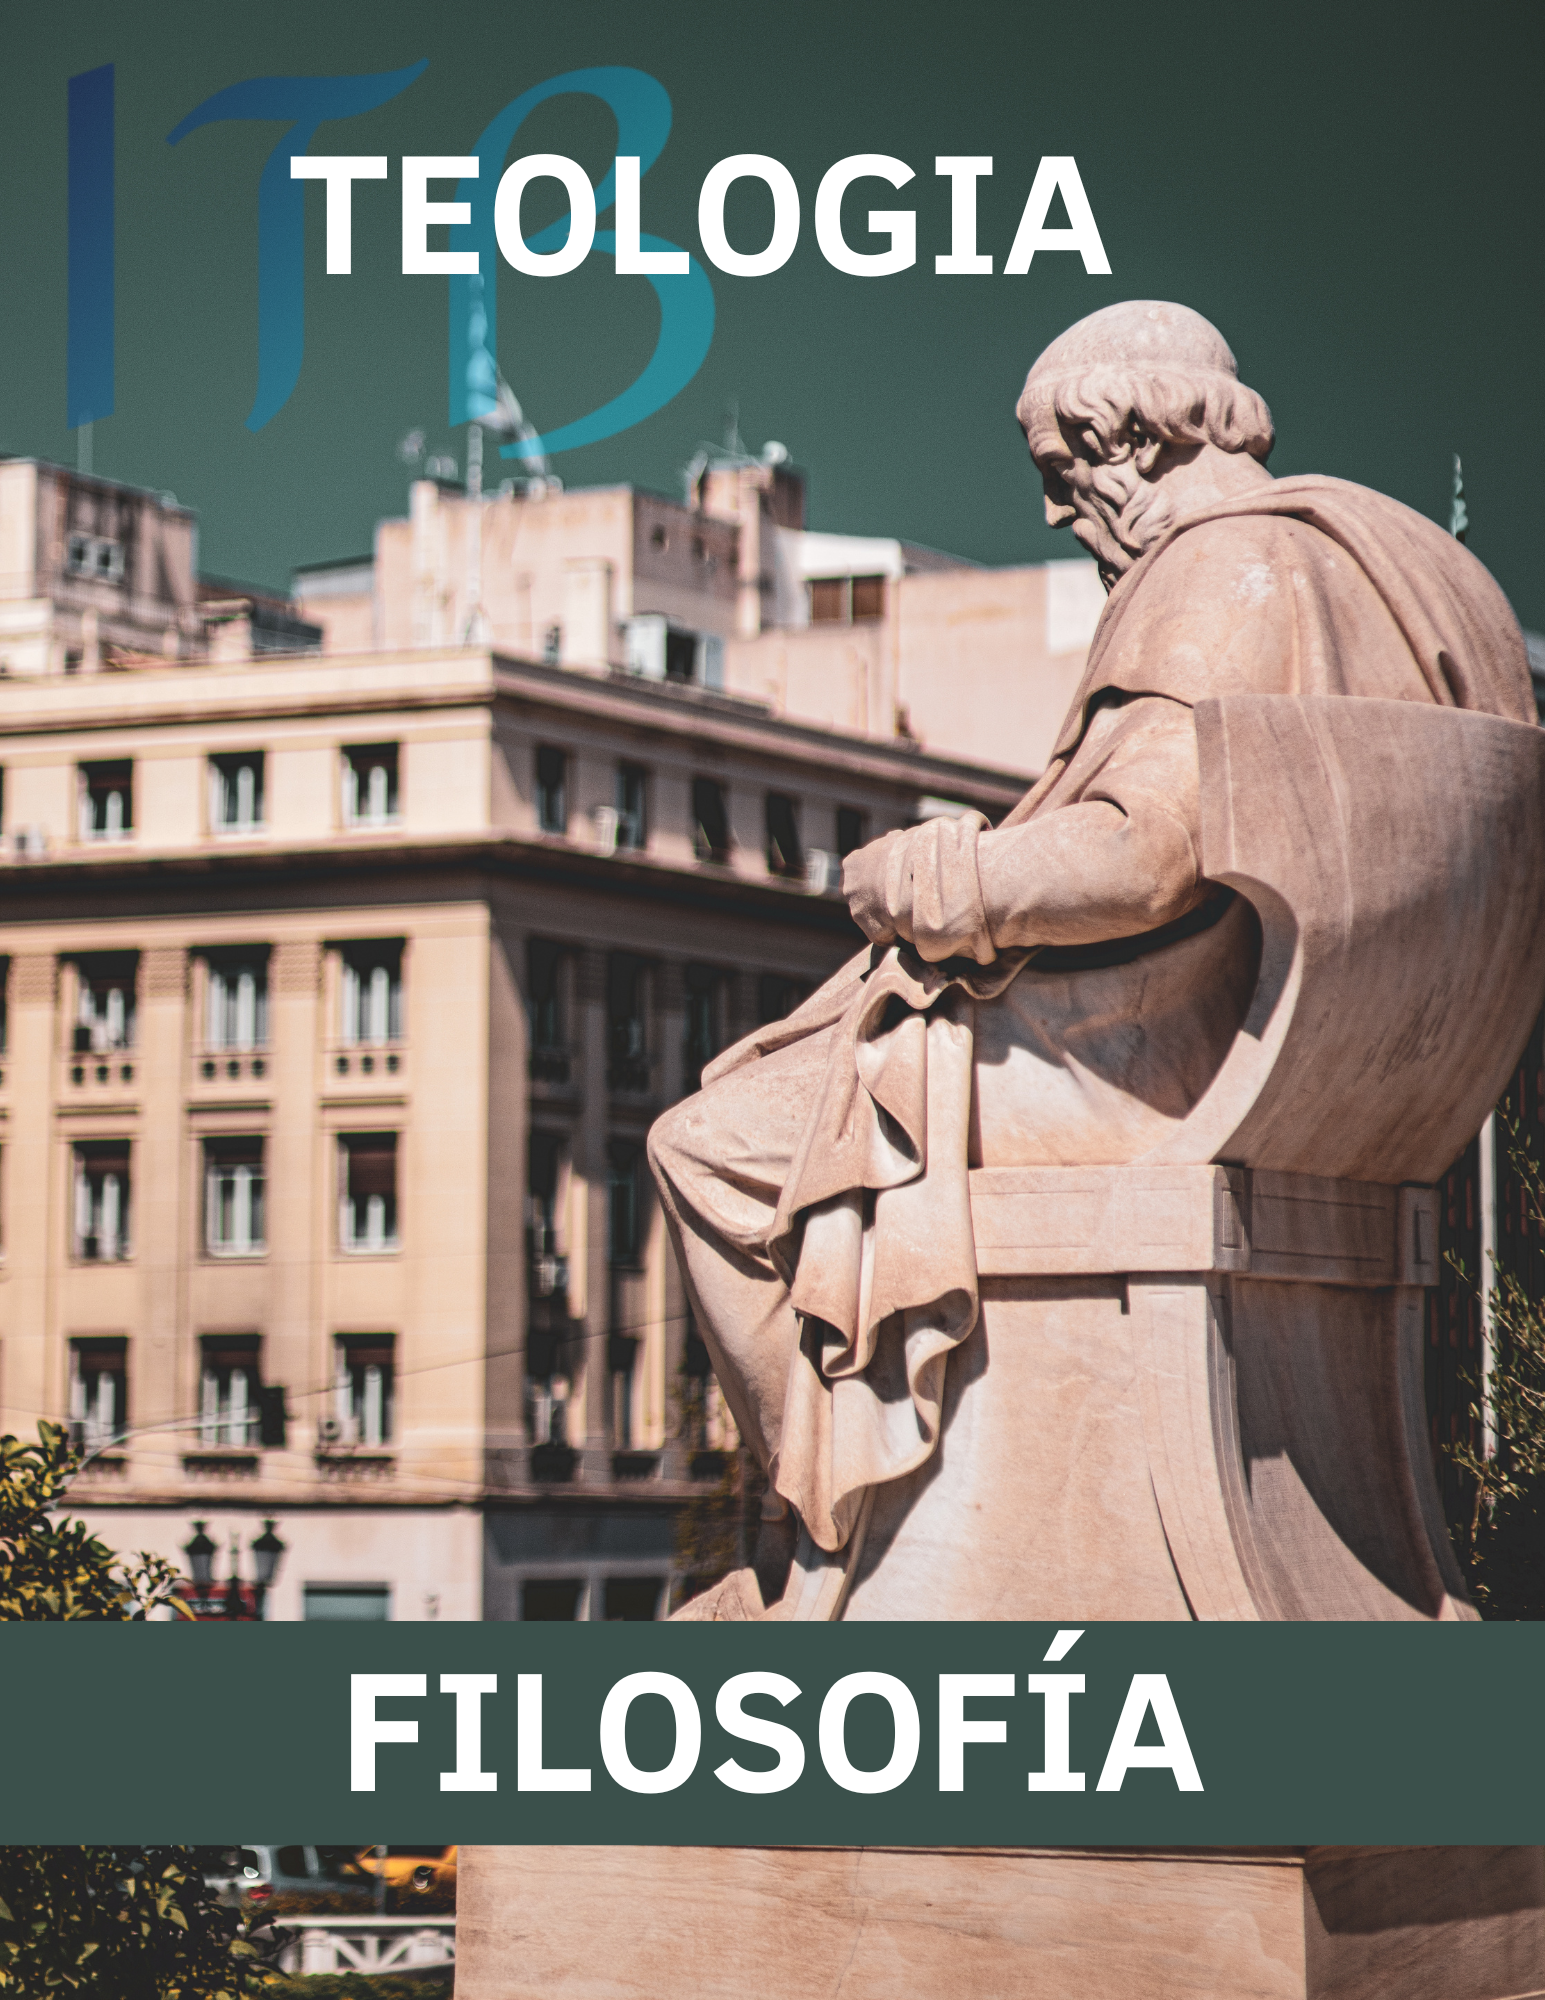 TEOLOGIA Y FILOSOFIA HOY.